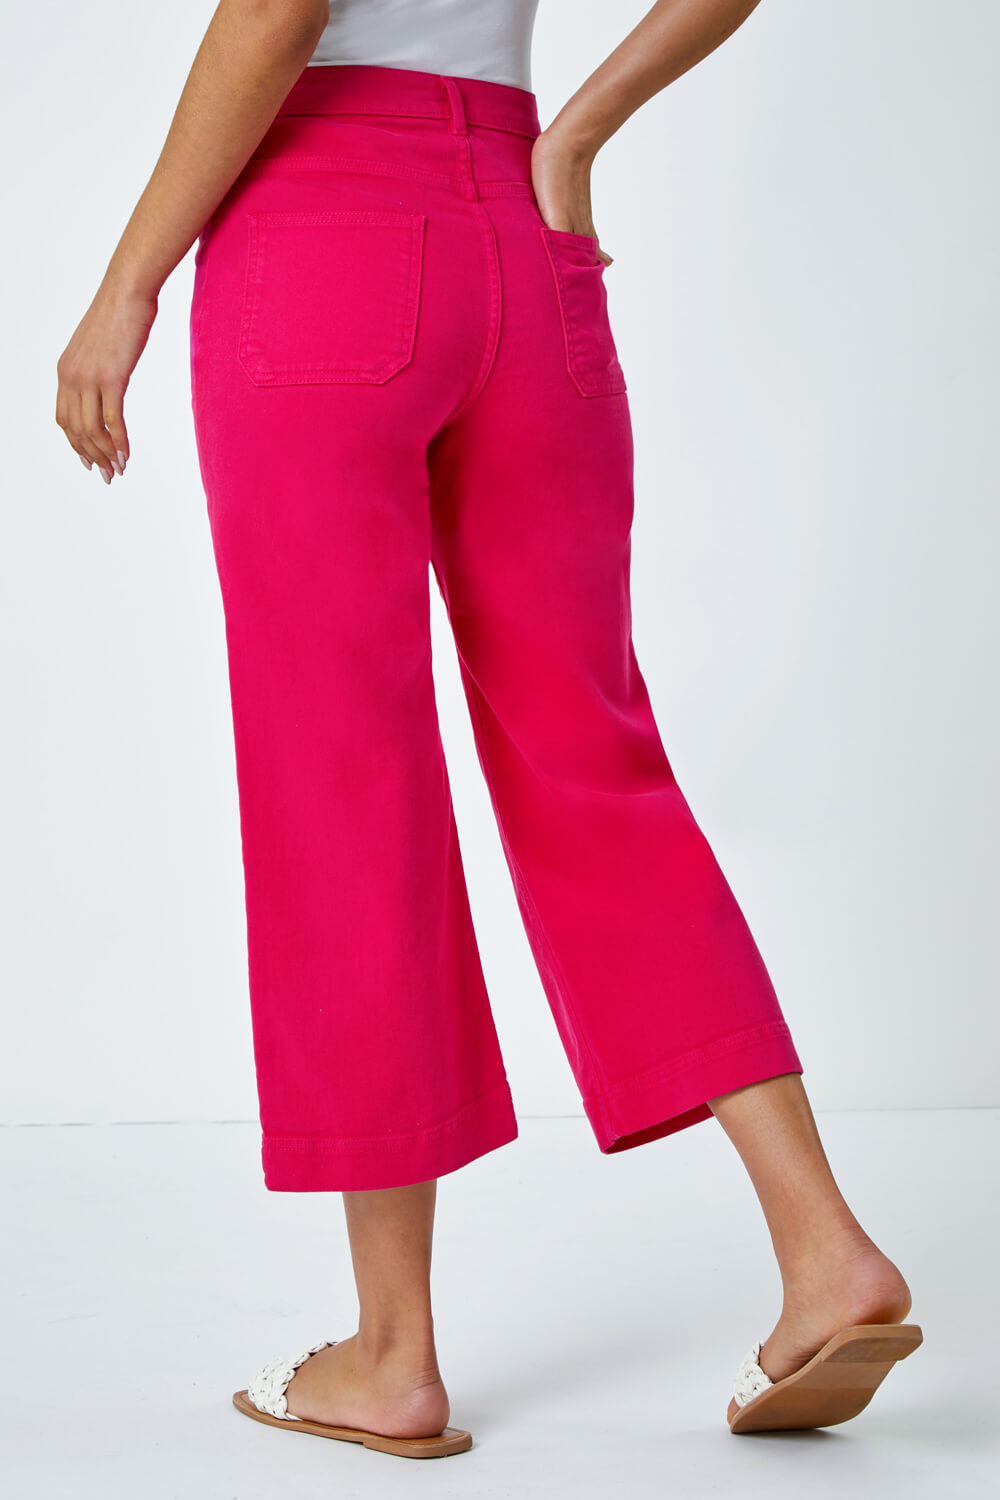 Hot Pink Cotton Denim Stretch Culottes, Image 3 of 5